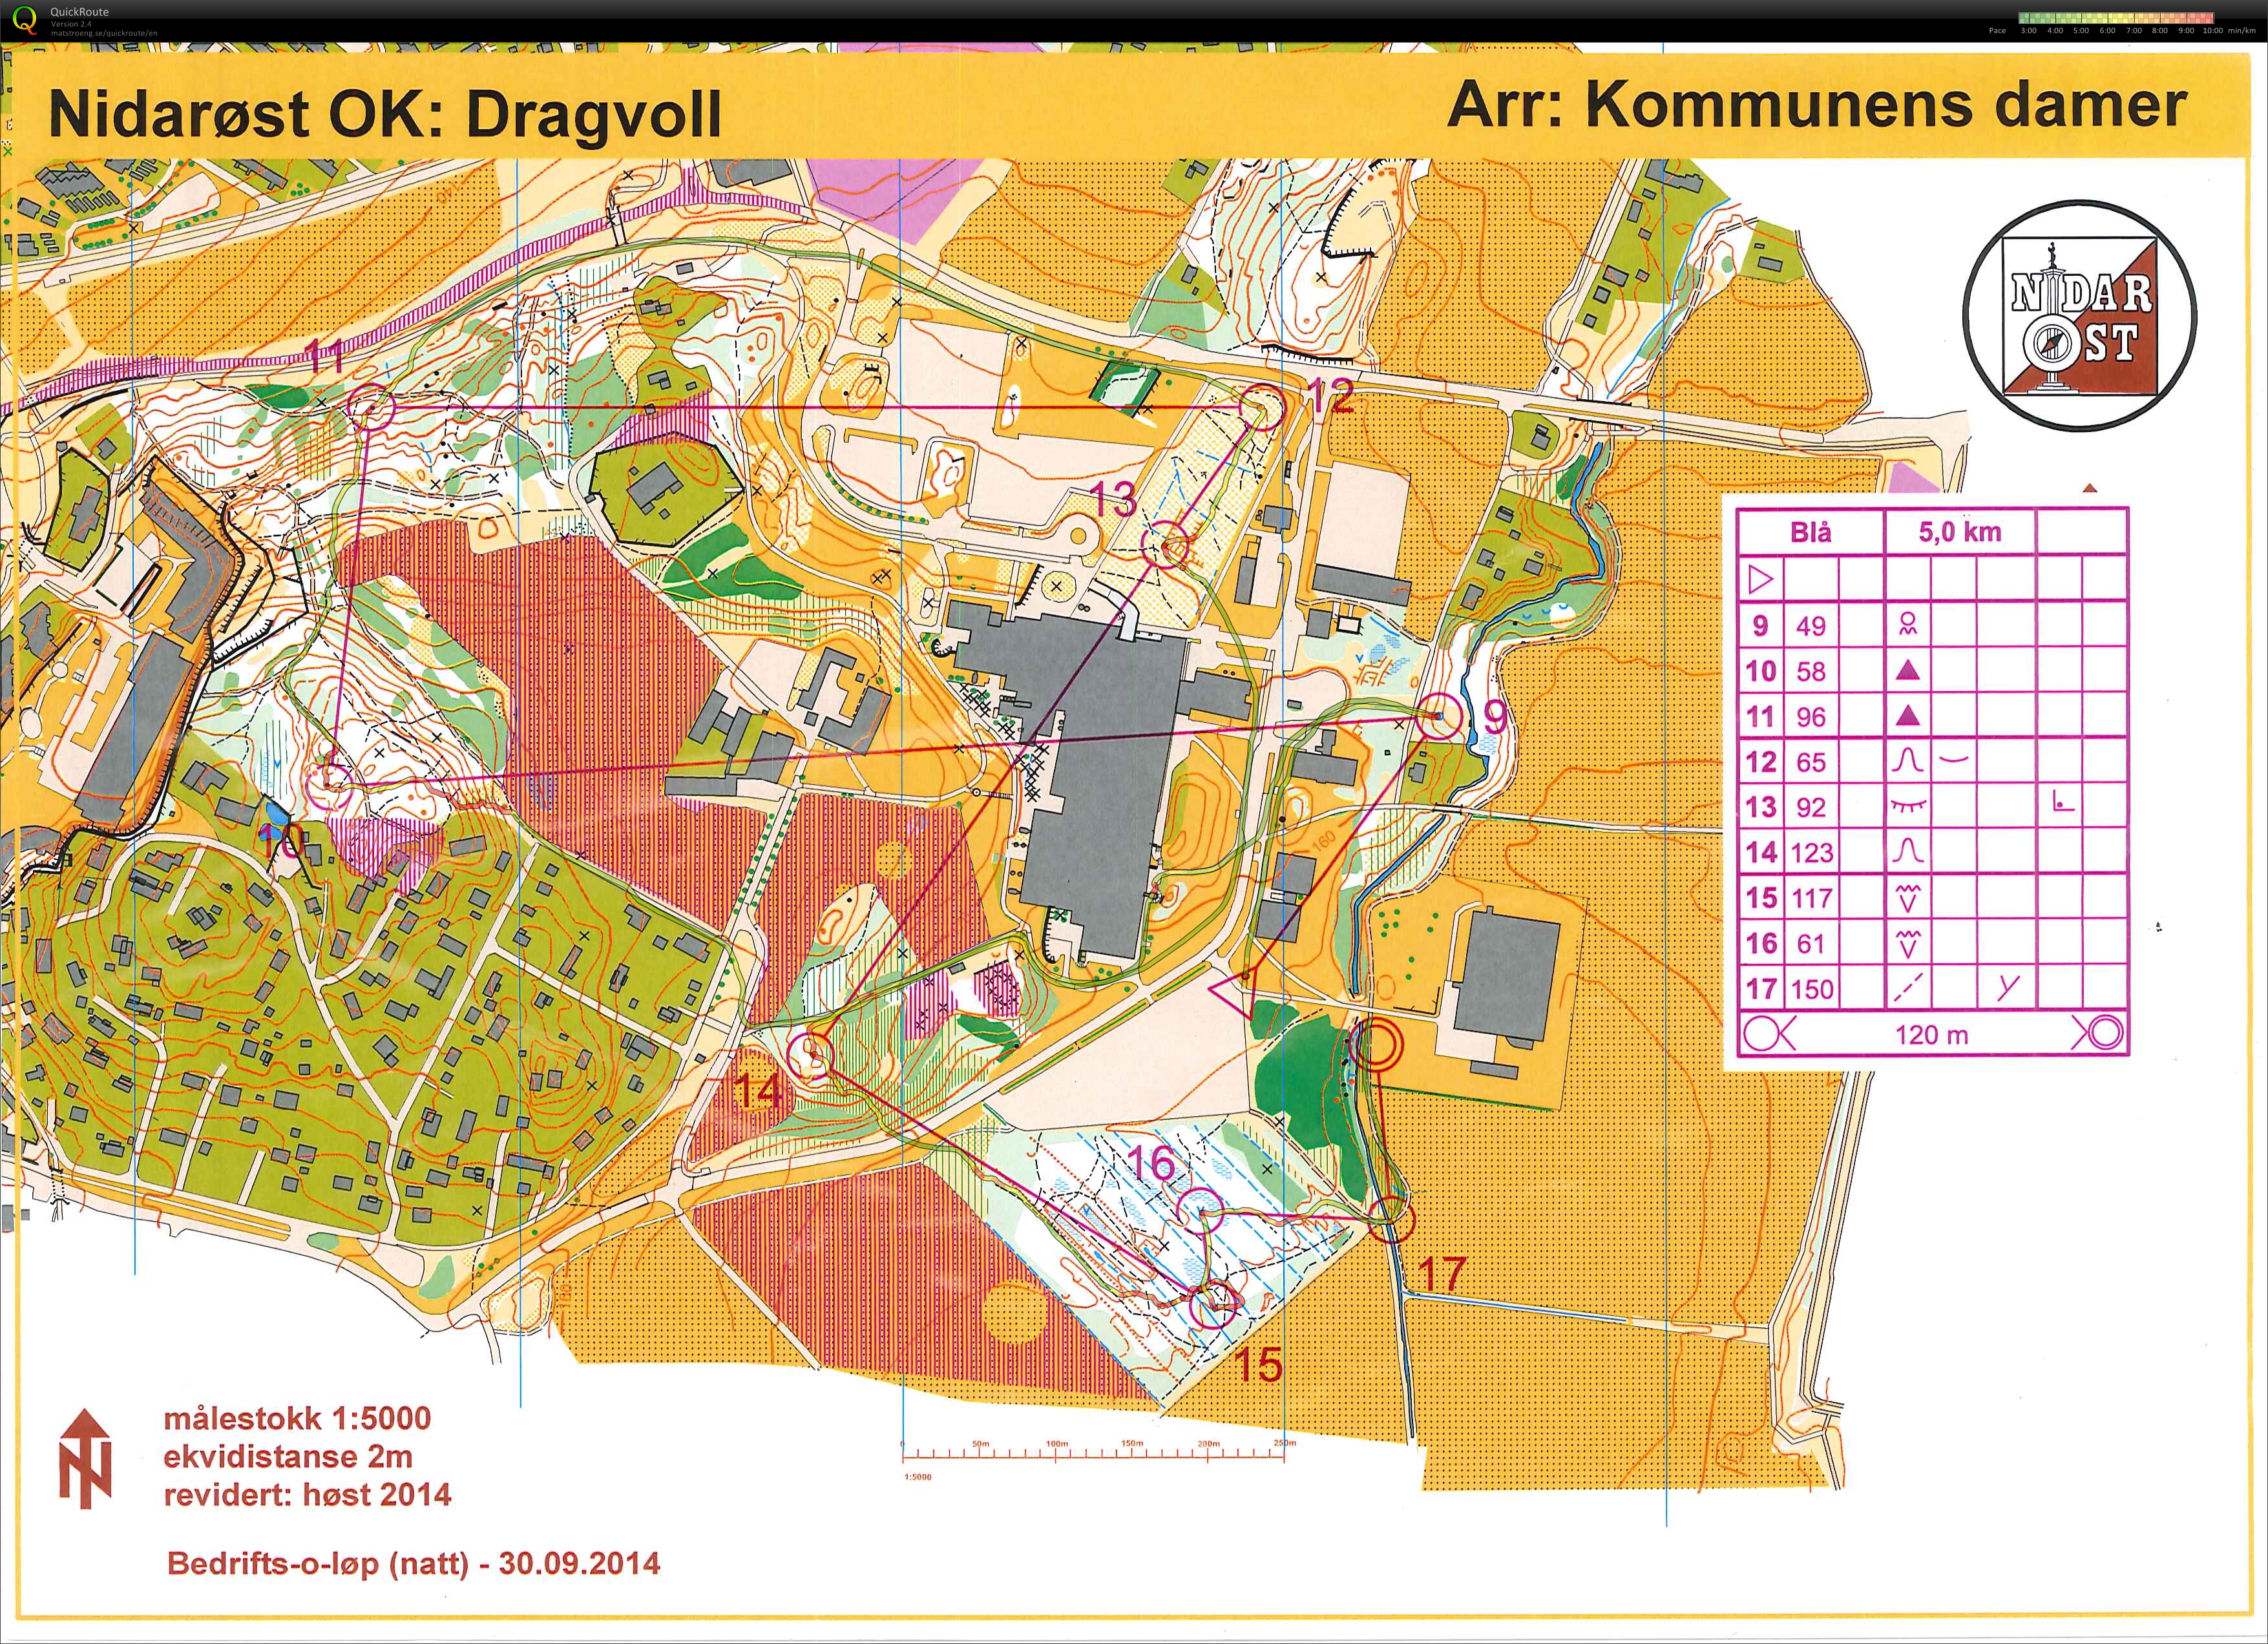 Bedrifts o-løp natt Dragvoll, del 2 (2014-09-30)